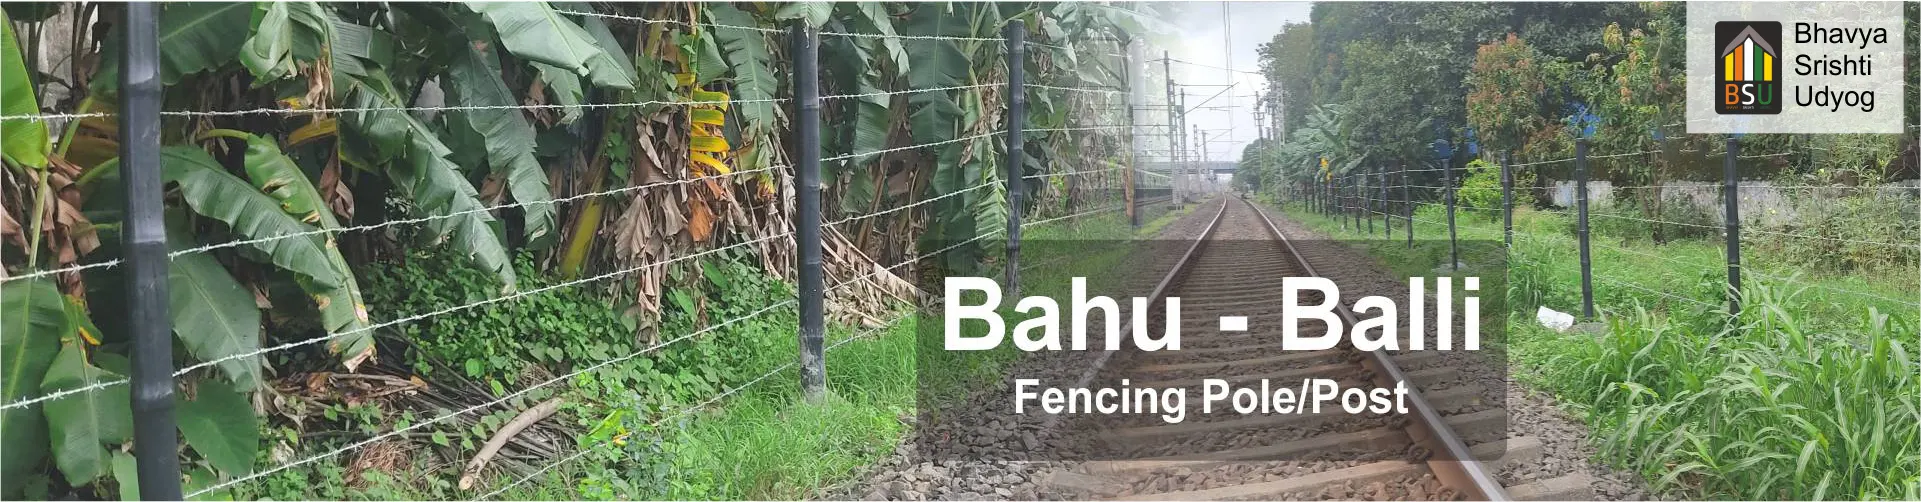 Bahu-Balli Fencing Pole/Post, bamboo poles, Bahu-Balli Trellis Supports, Bahu-Balli Poles with Anchor